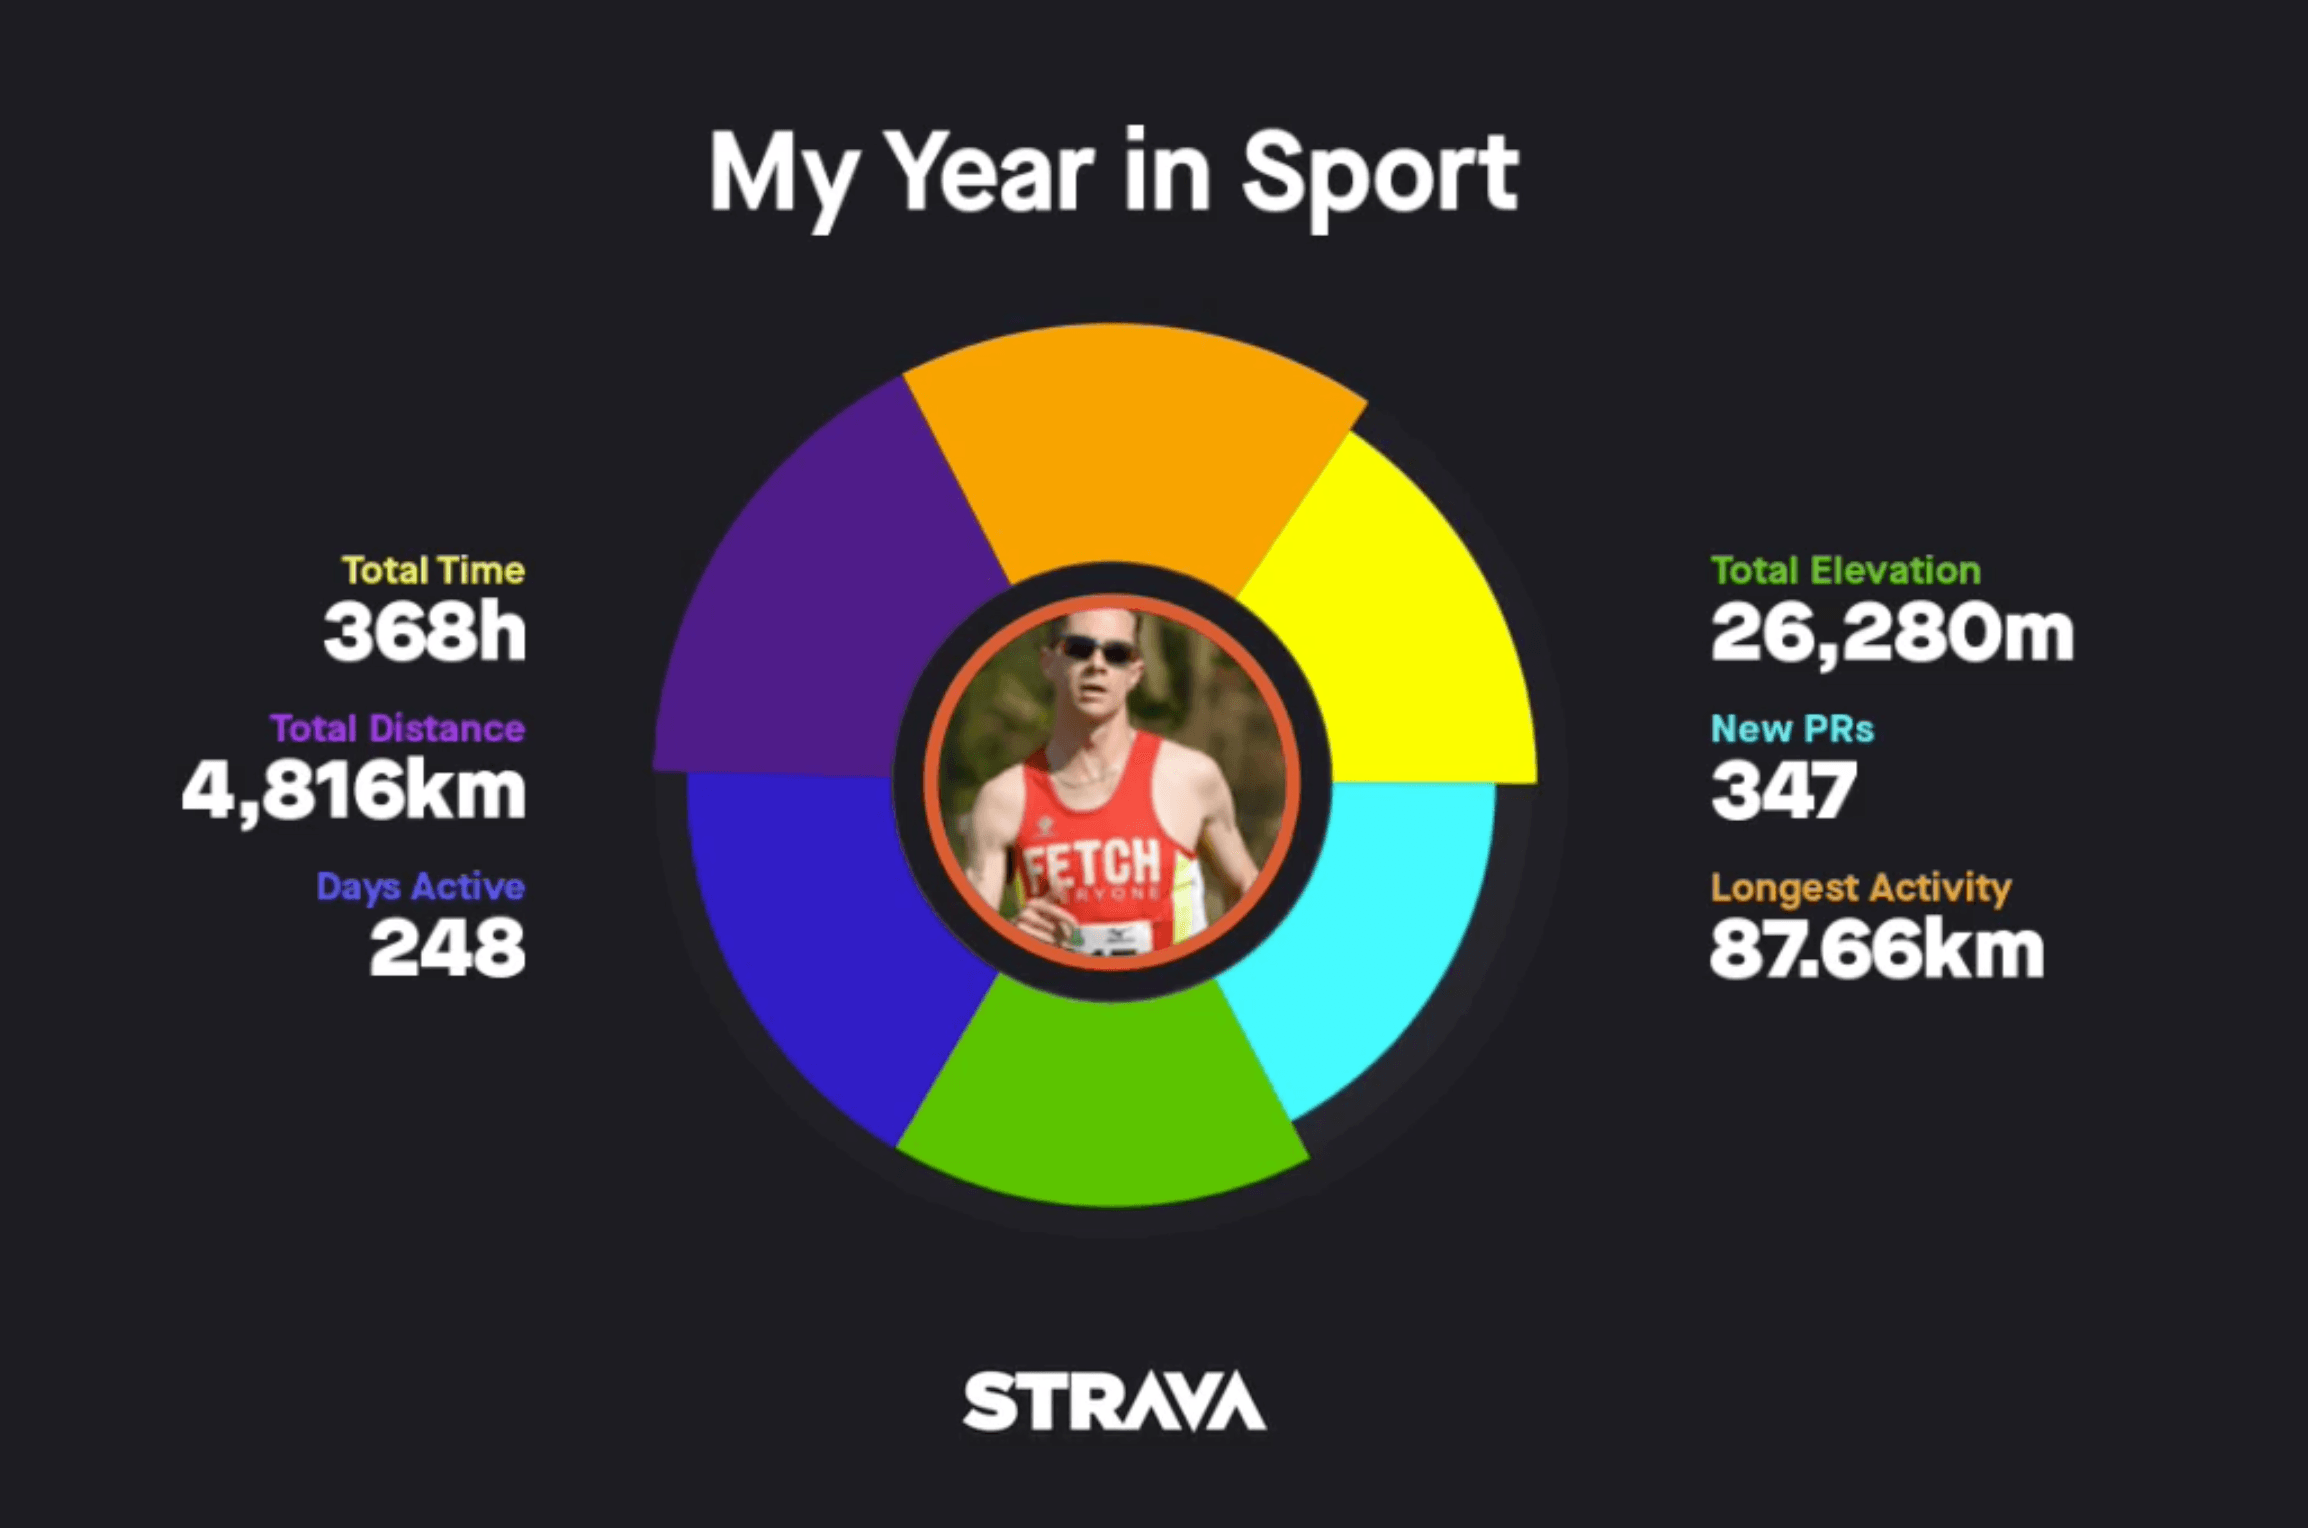 2017 Year in Sport Summary from Strava